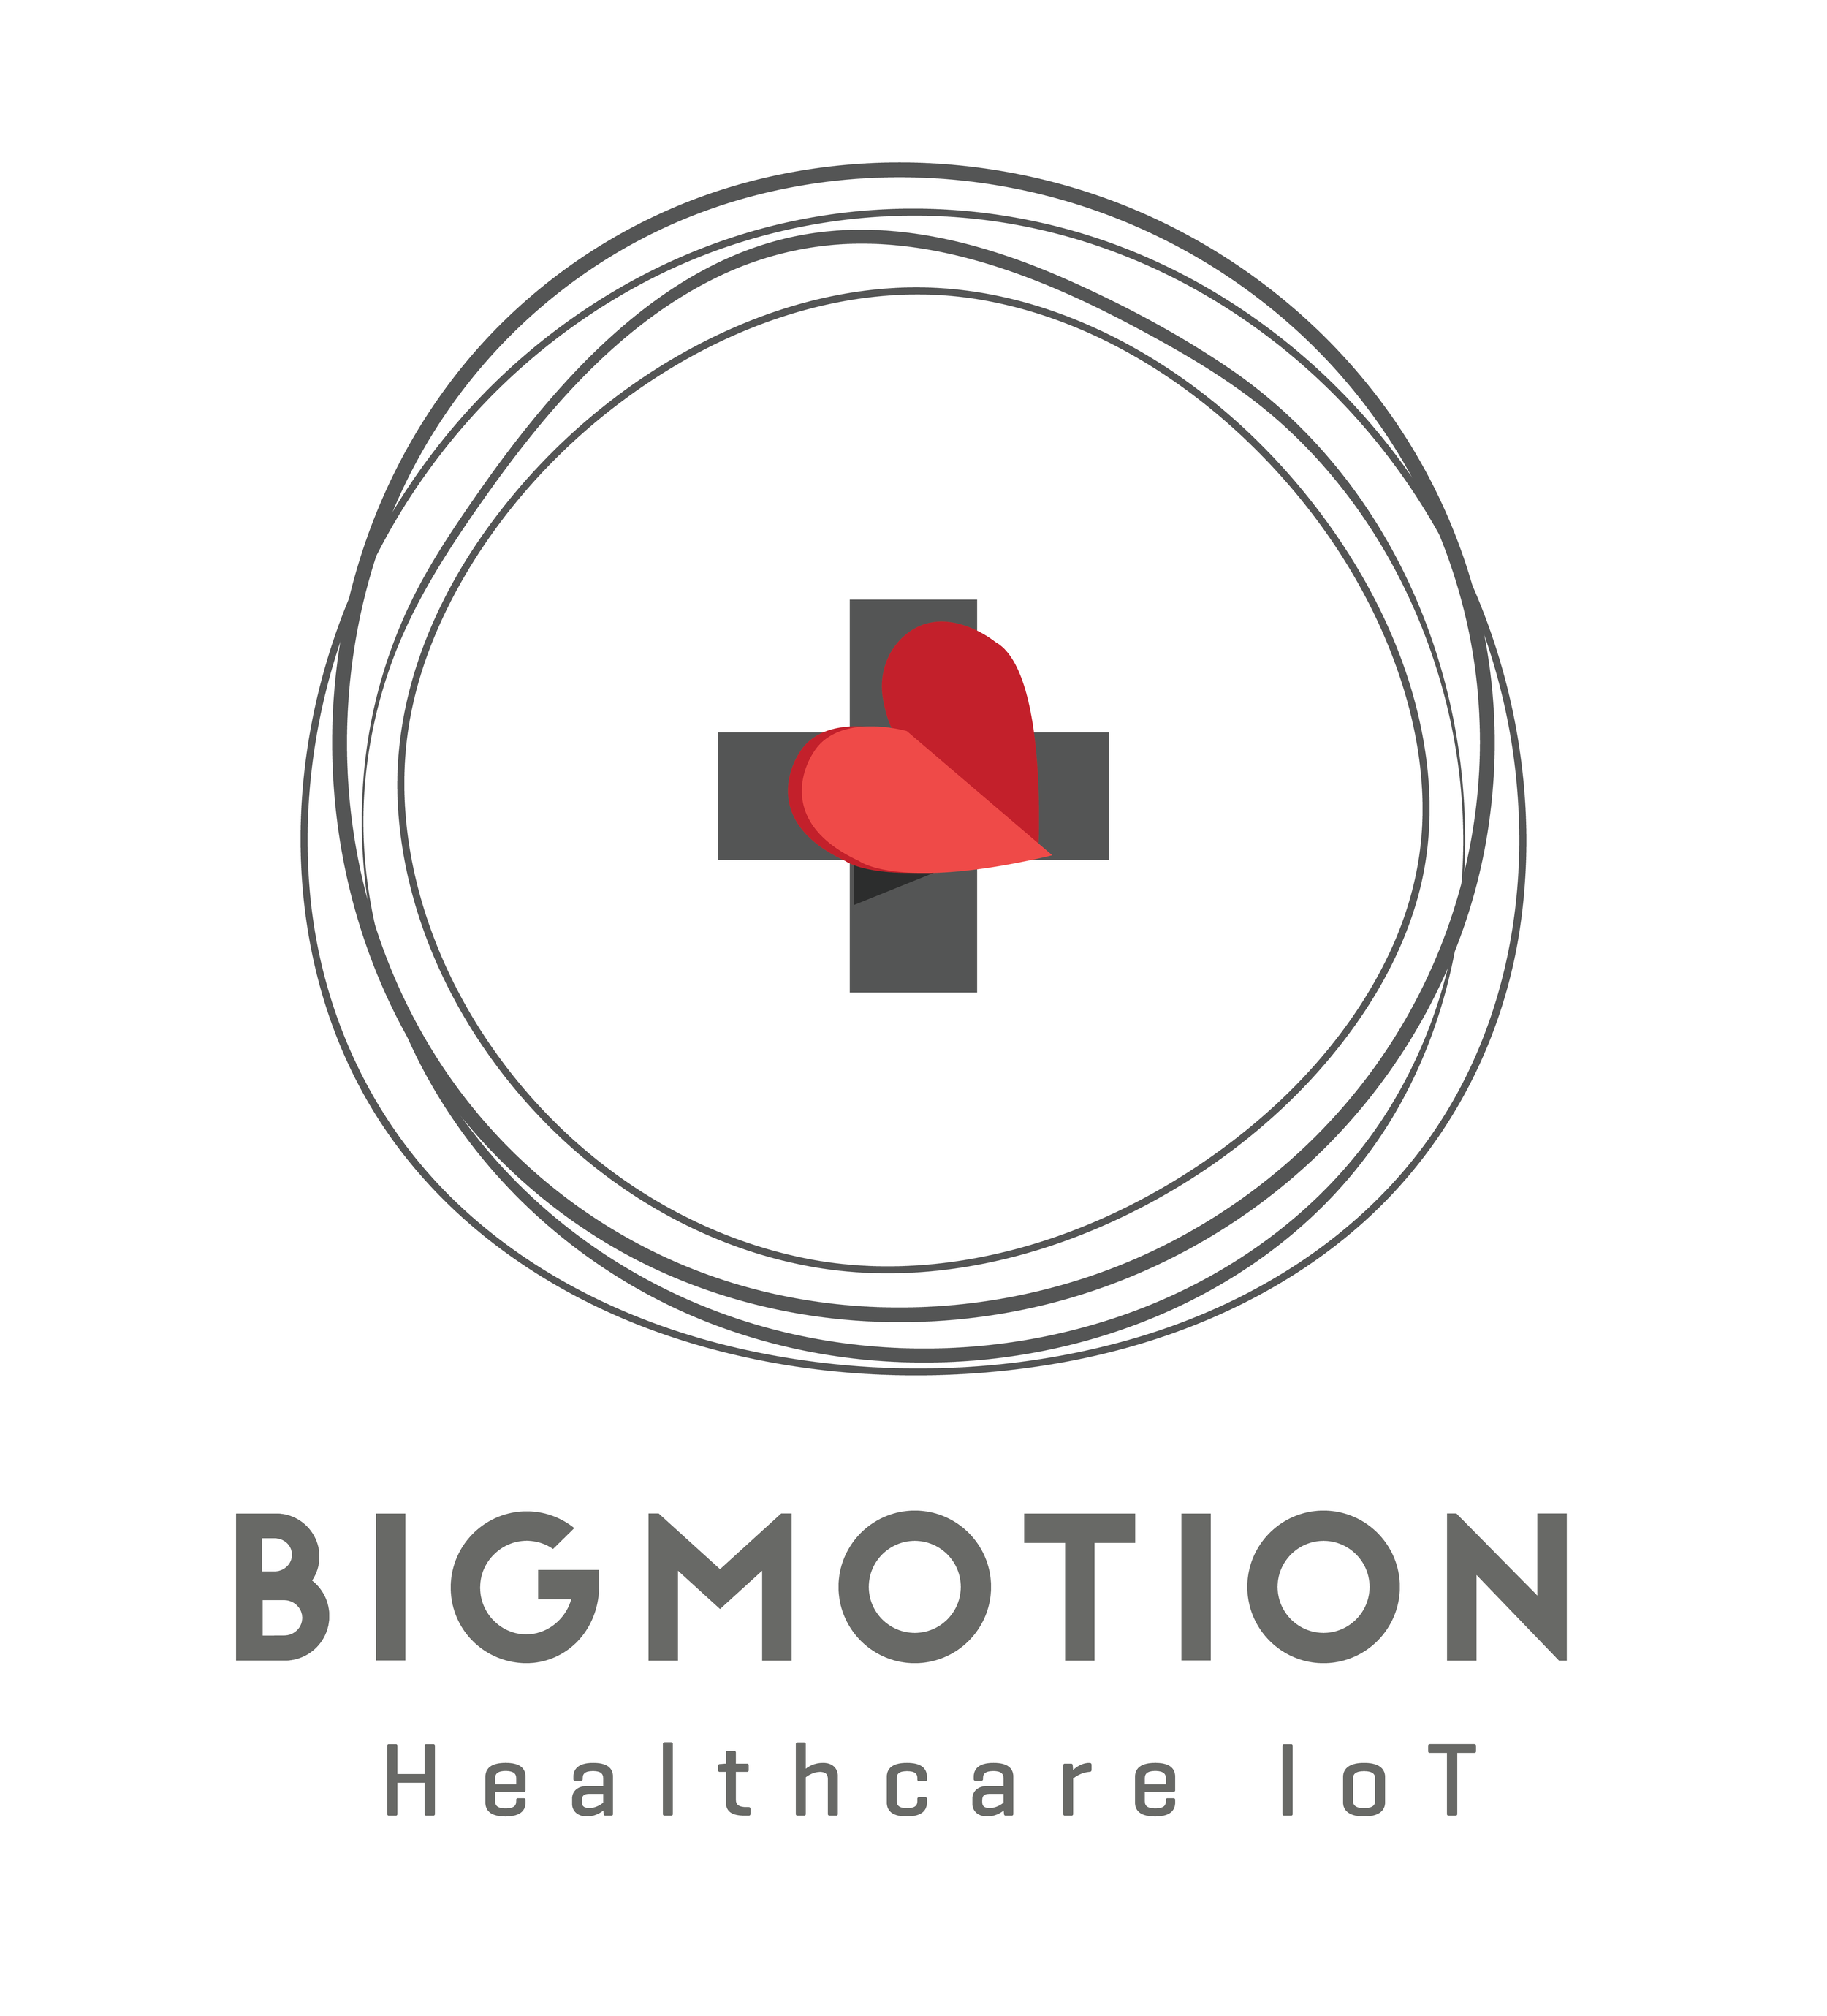 Logo_Bigmotion-02.png